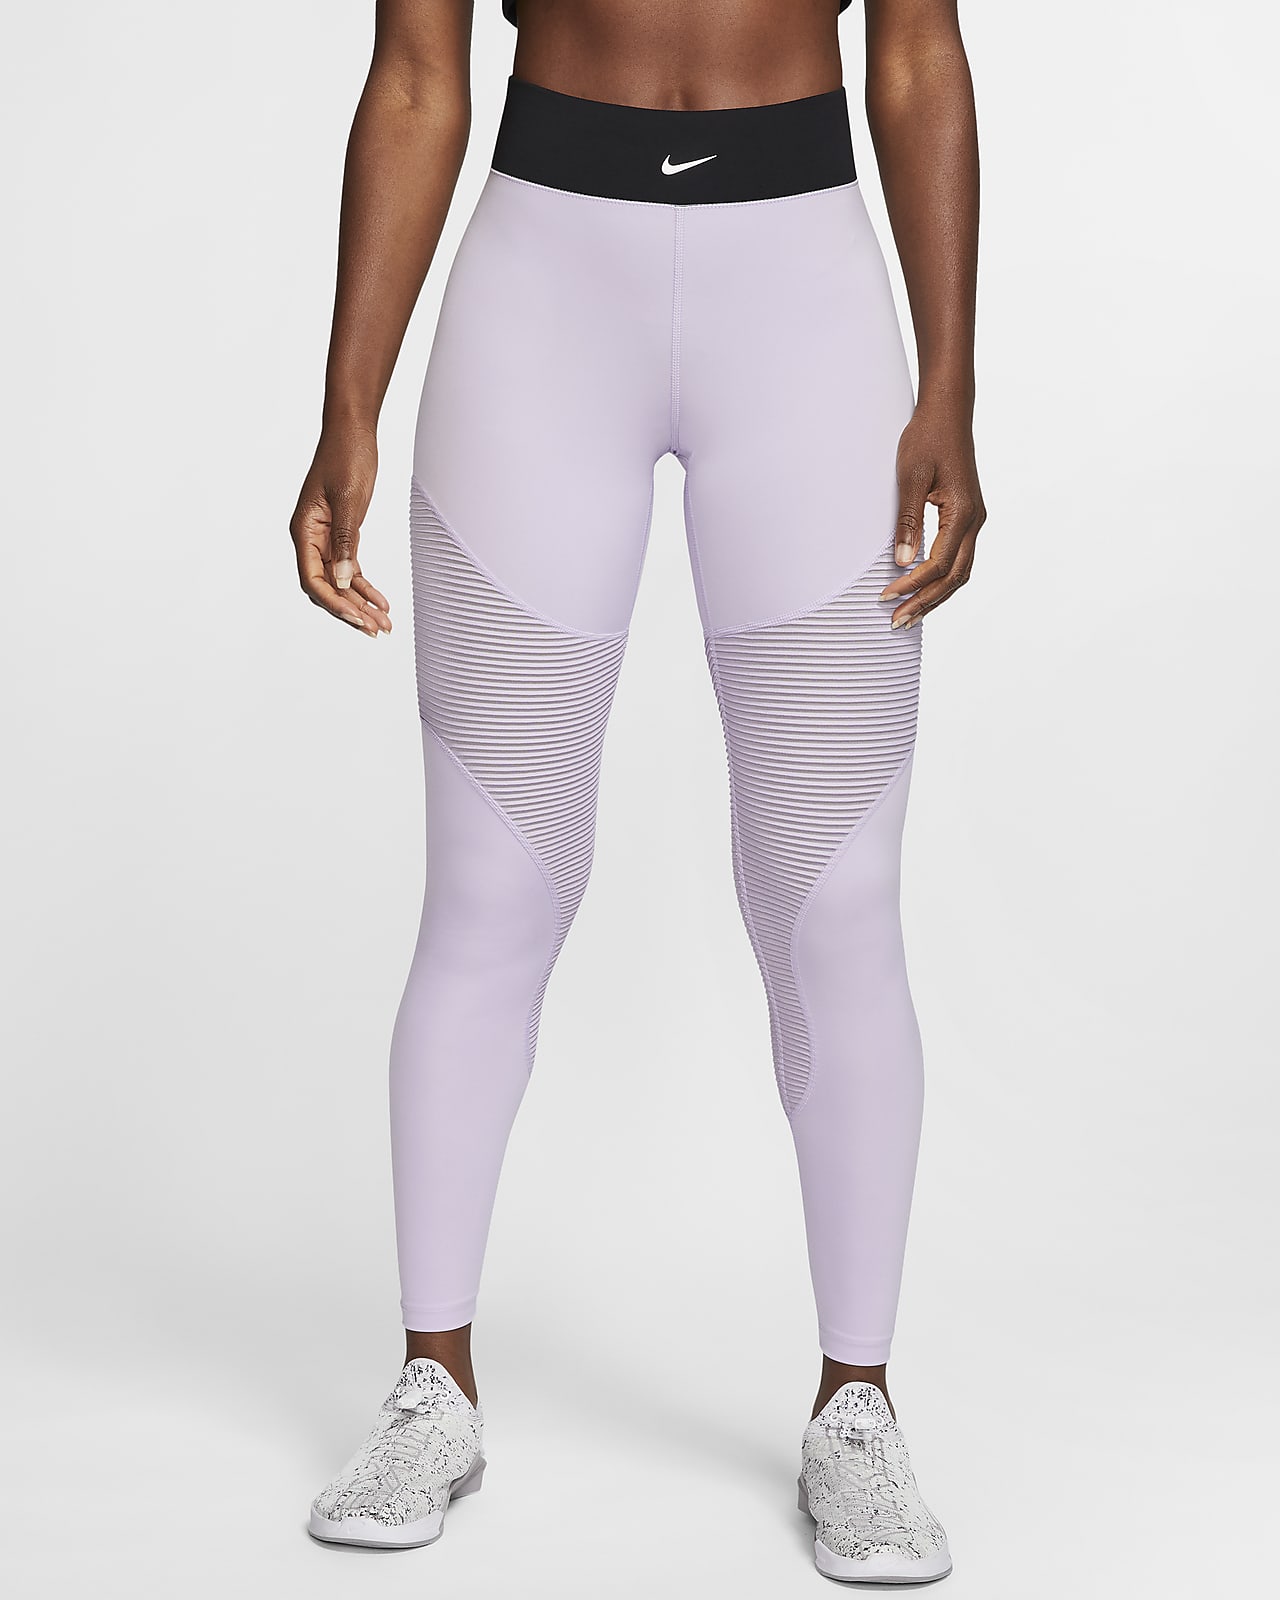 Mallas para mujer Nike Pro AeroAdapt. Nike.com